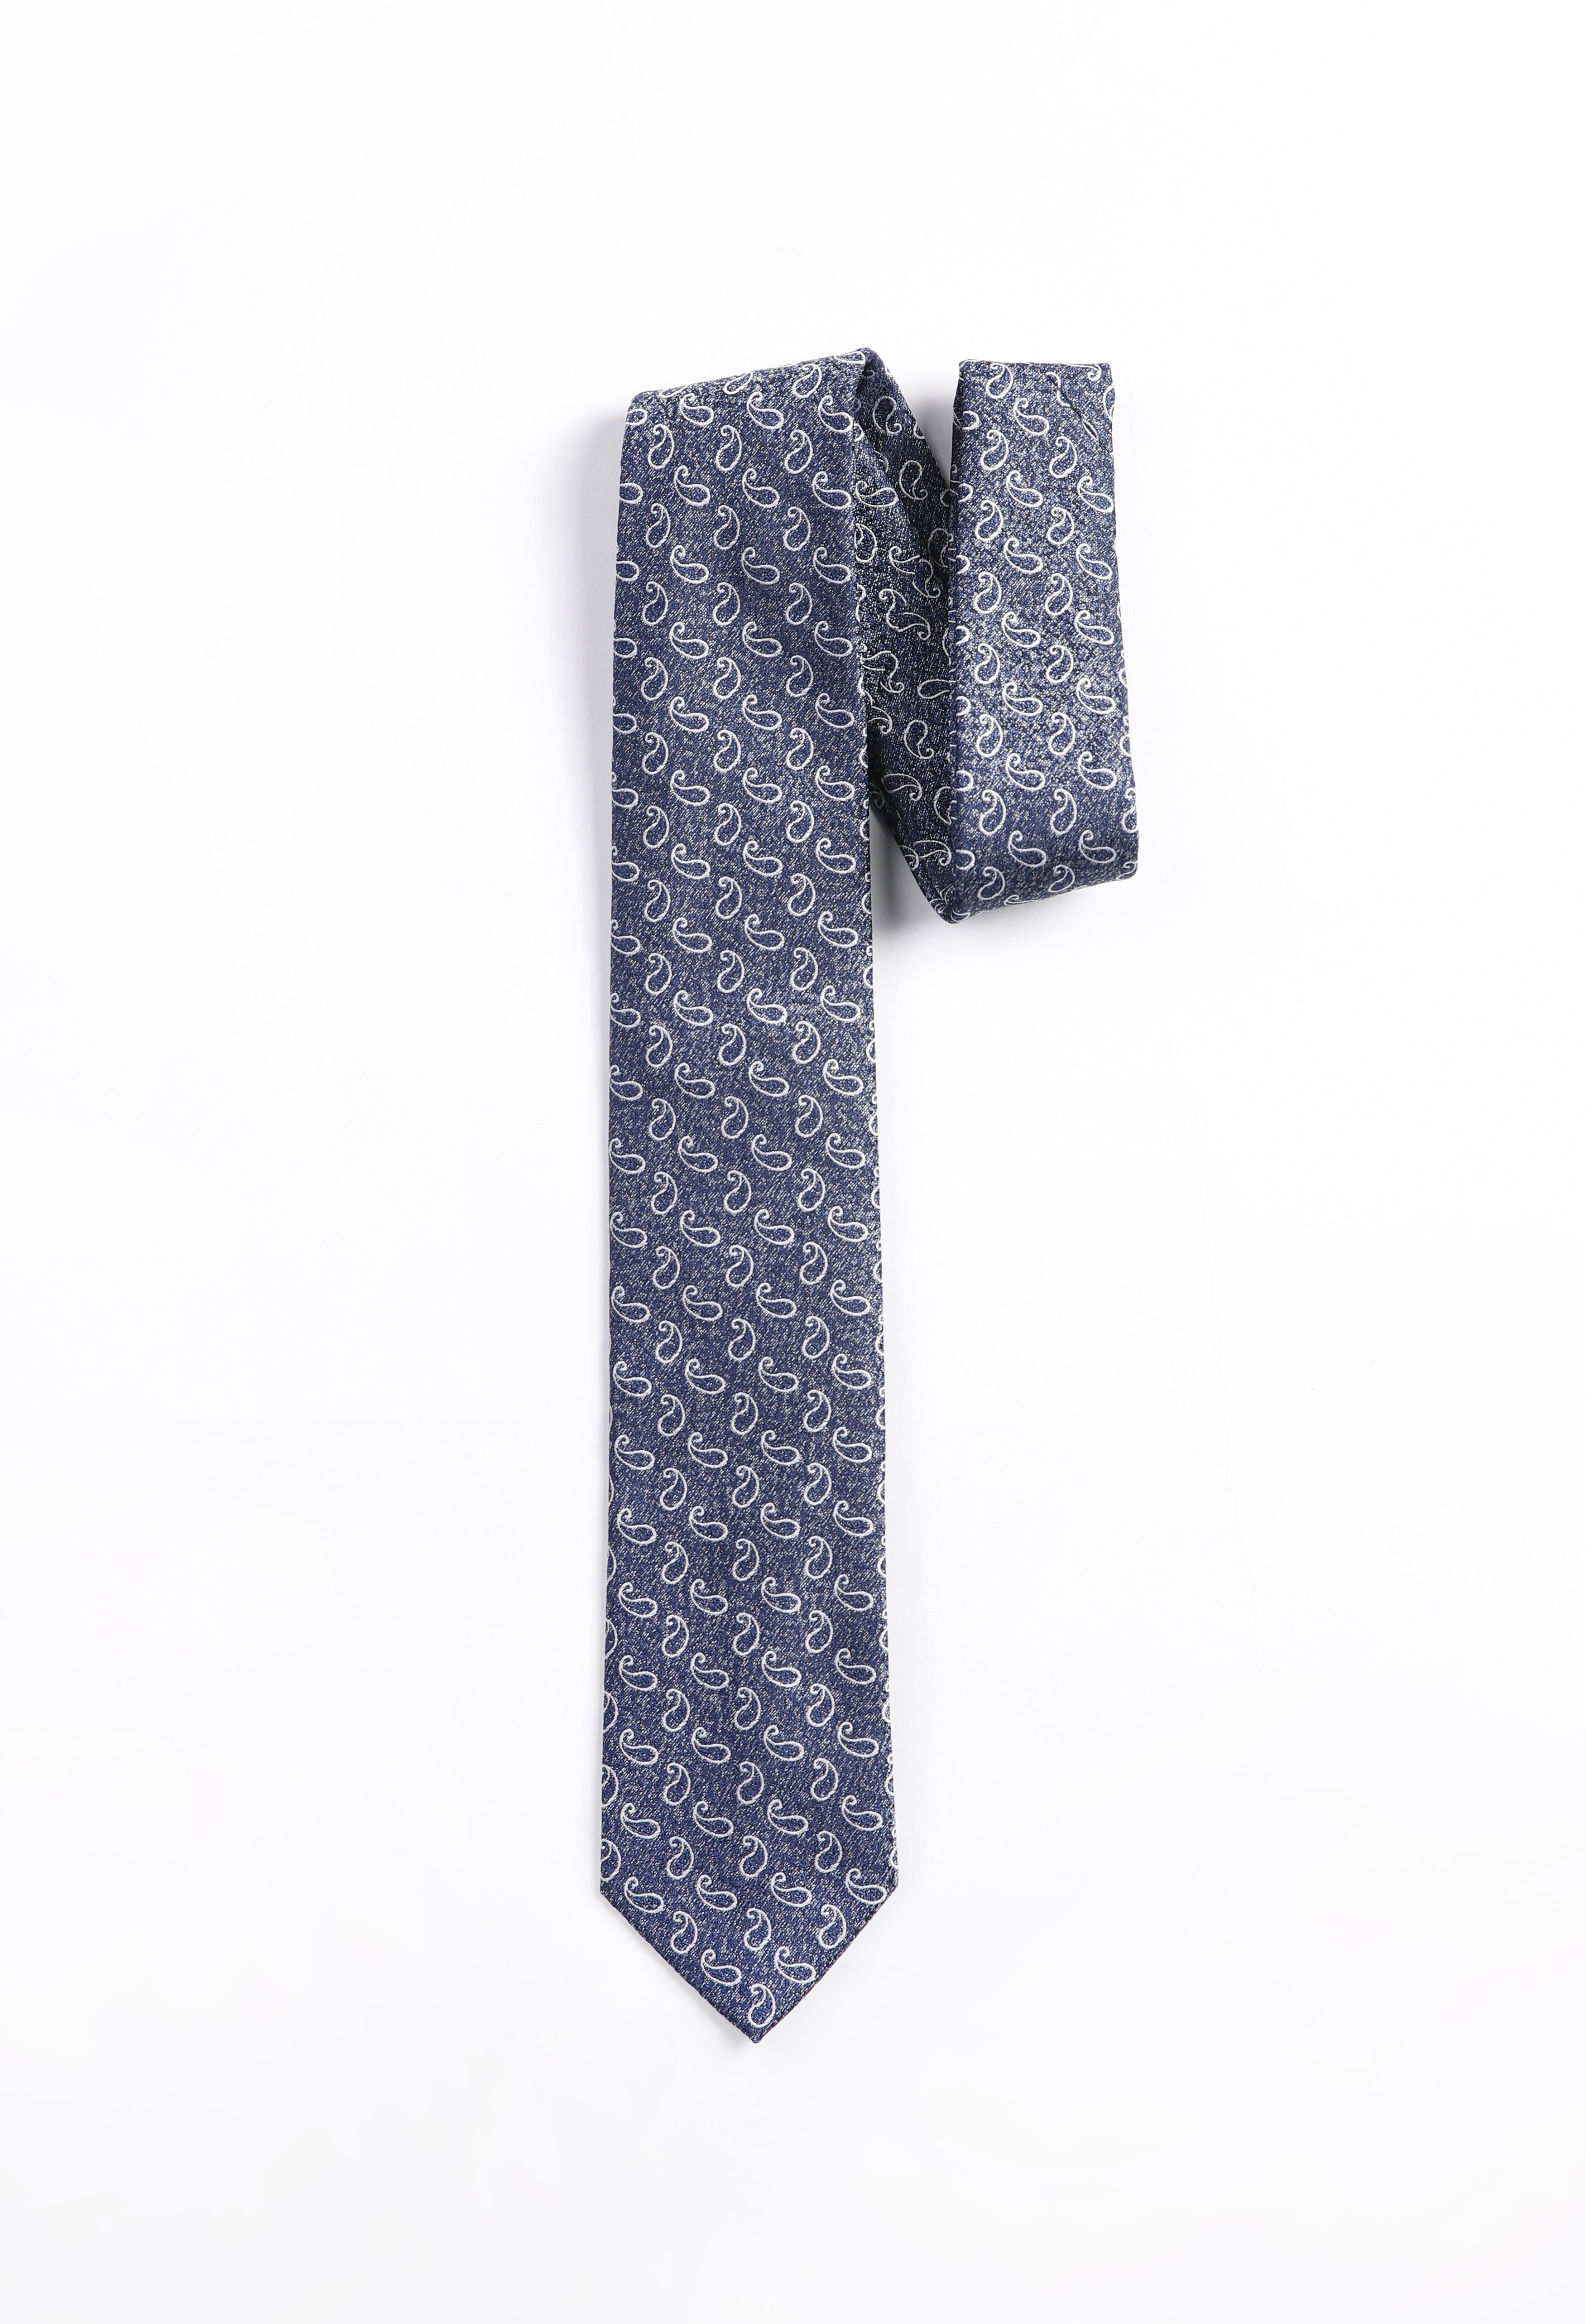 Philadelphia Blue Floral Tie (TIE-000031)